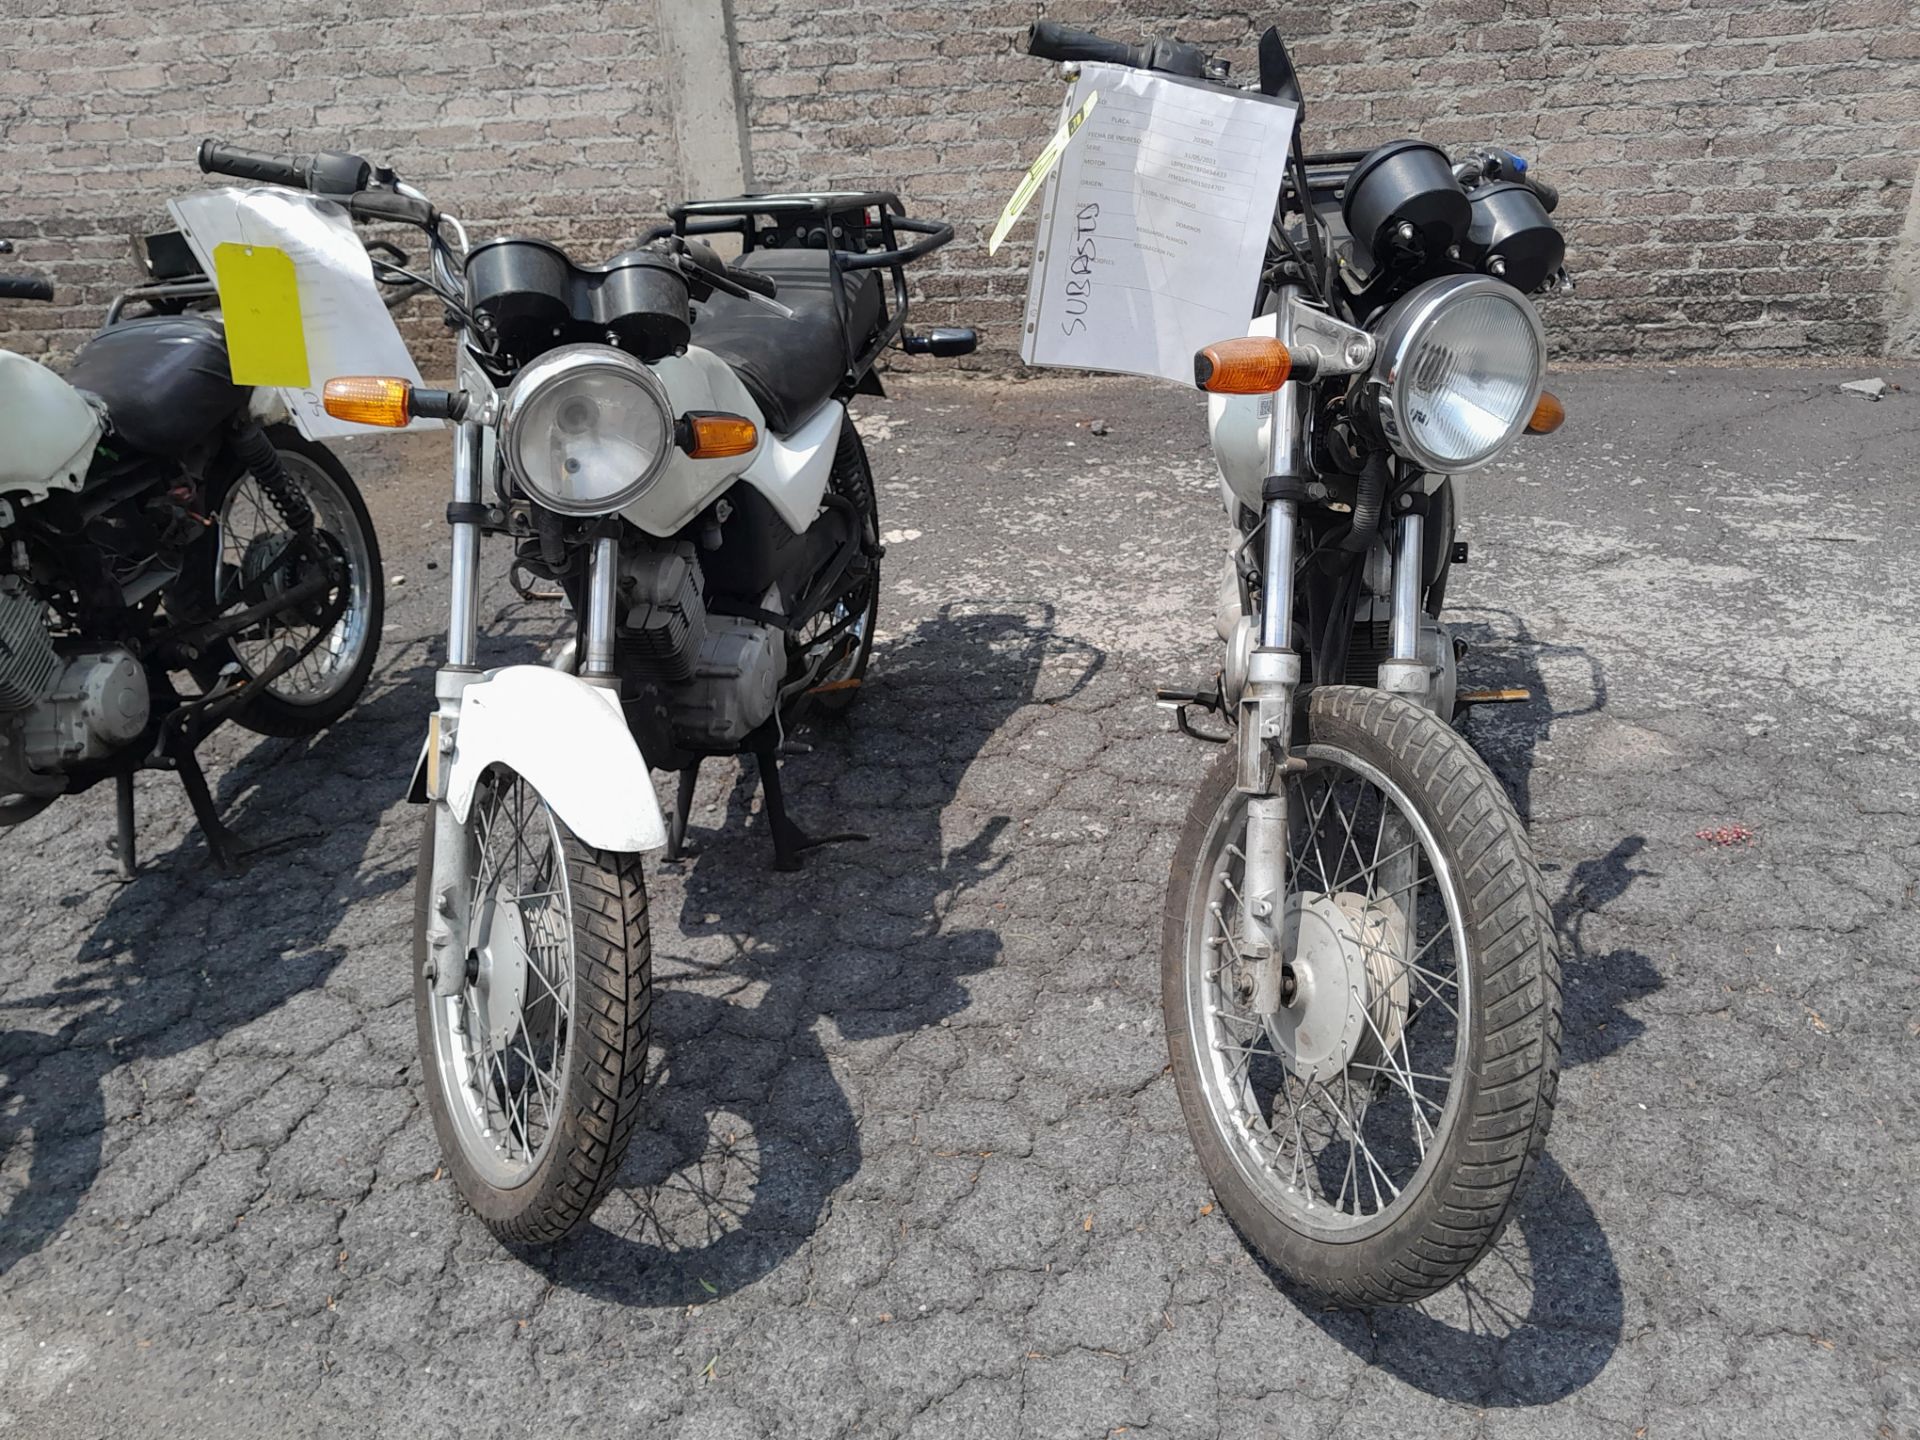 Lote de 2 Motocicletas contiene: 1 Motocicleta de trabajo usada Marca Yamaha YB 125, Modelo 2015, N